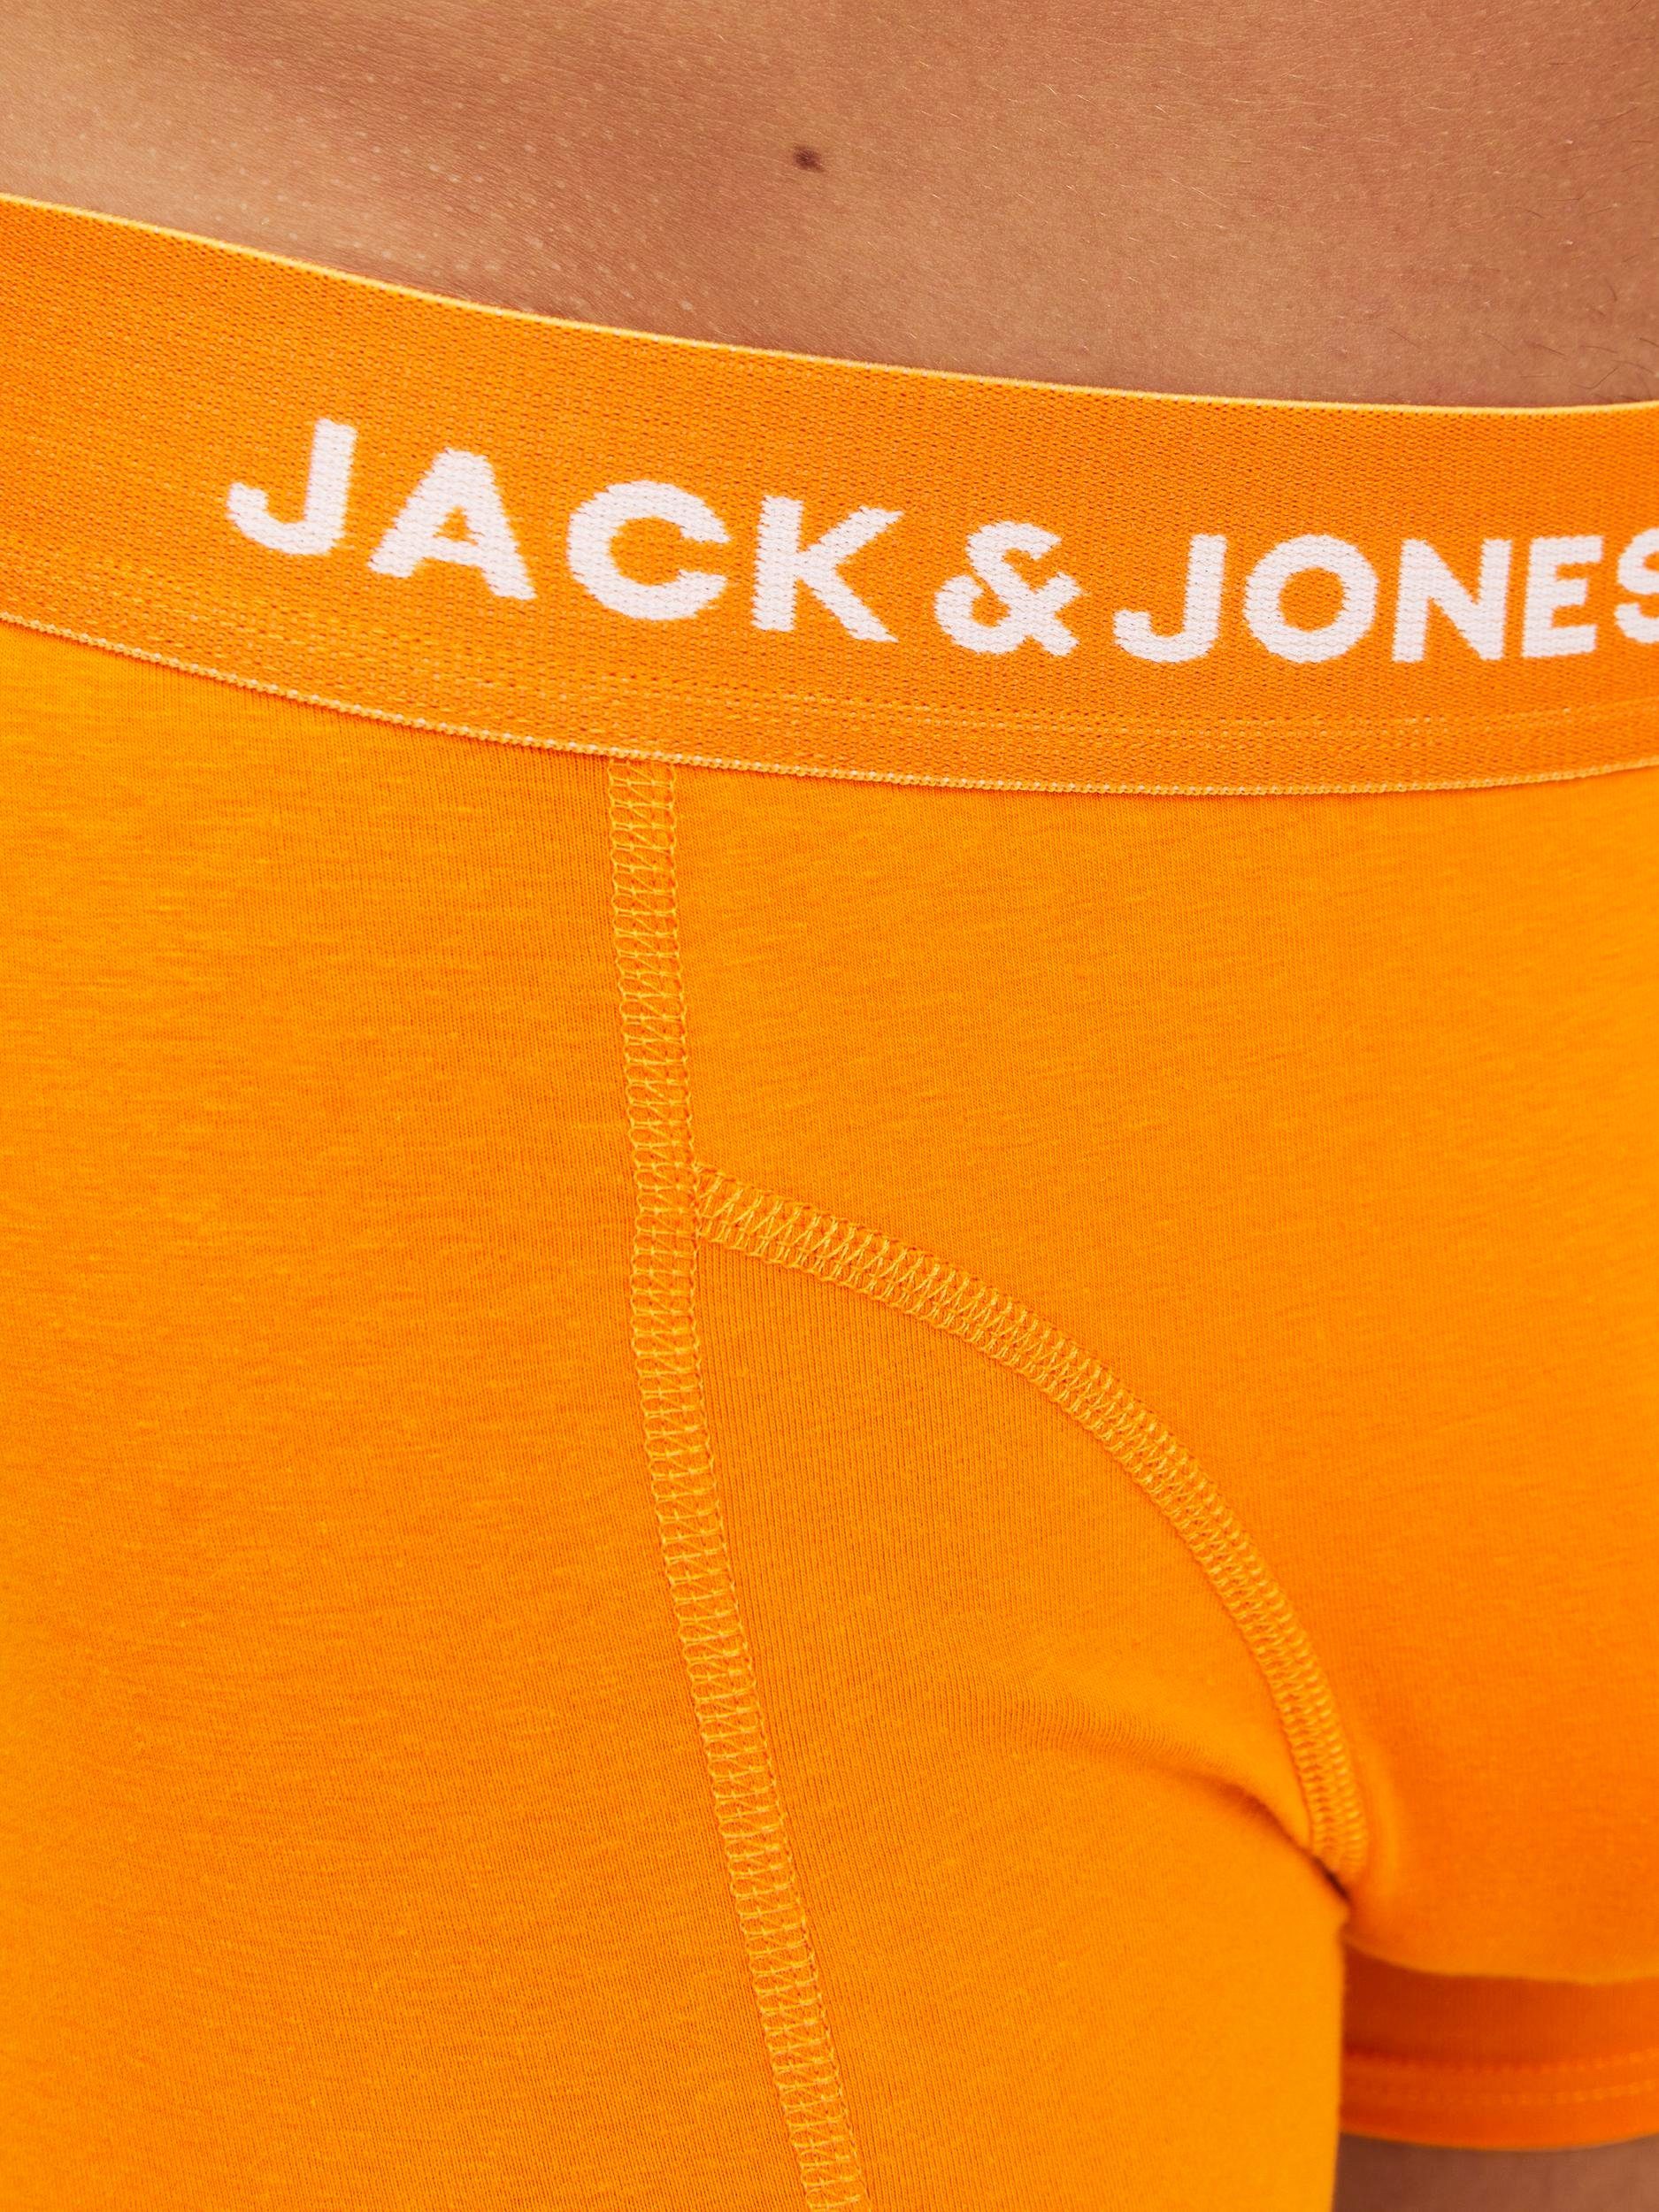 Jack & Jones Trunk JACKEX TRUNKS 3 PACK NOOS (set 3 stuks)